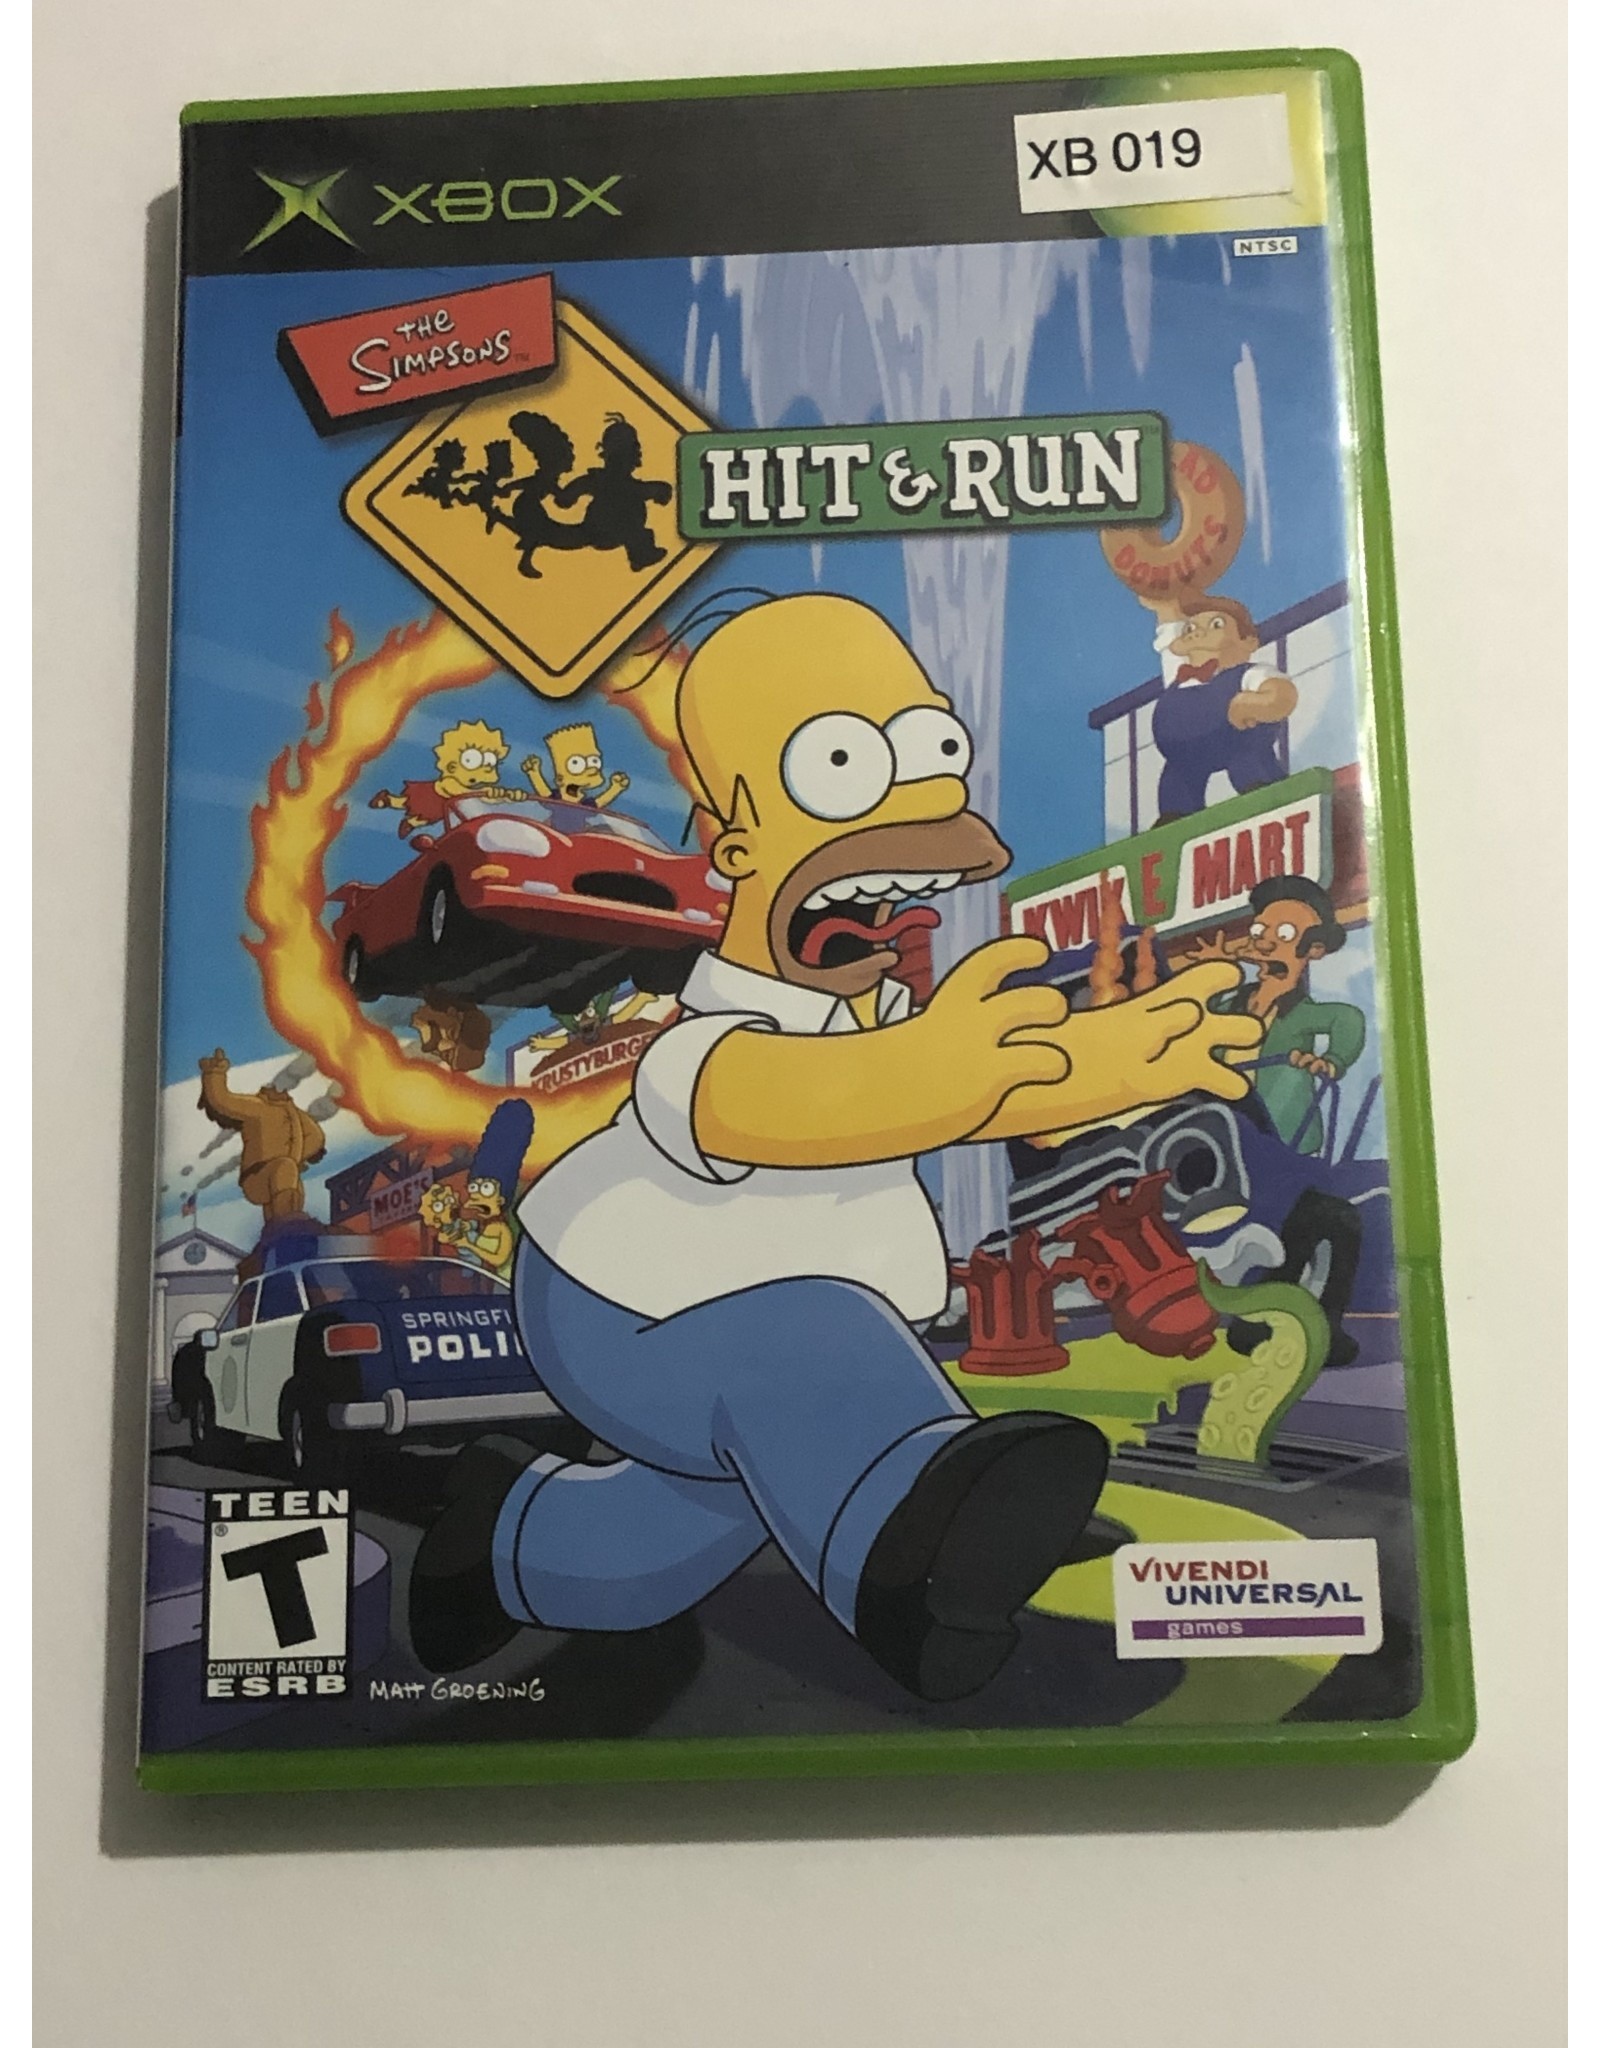 VIVENDI UNIVERSAL The Simpsons Hit and Run (Xbox)